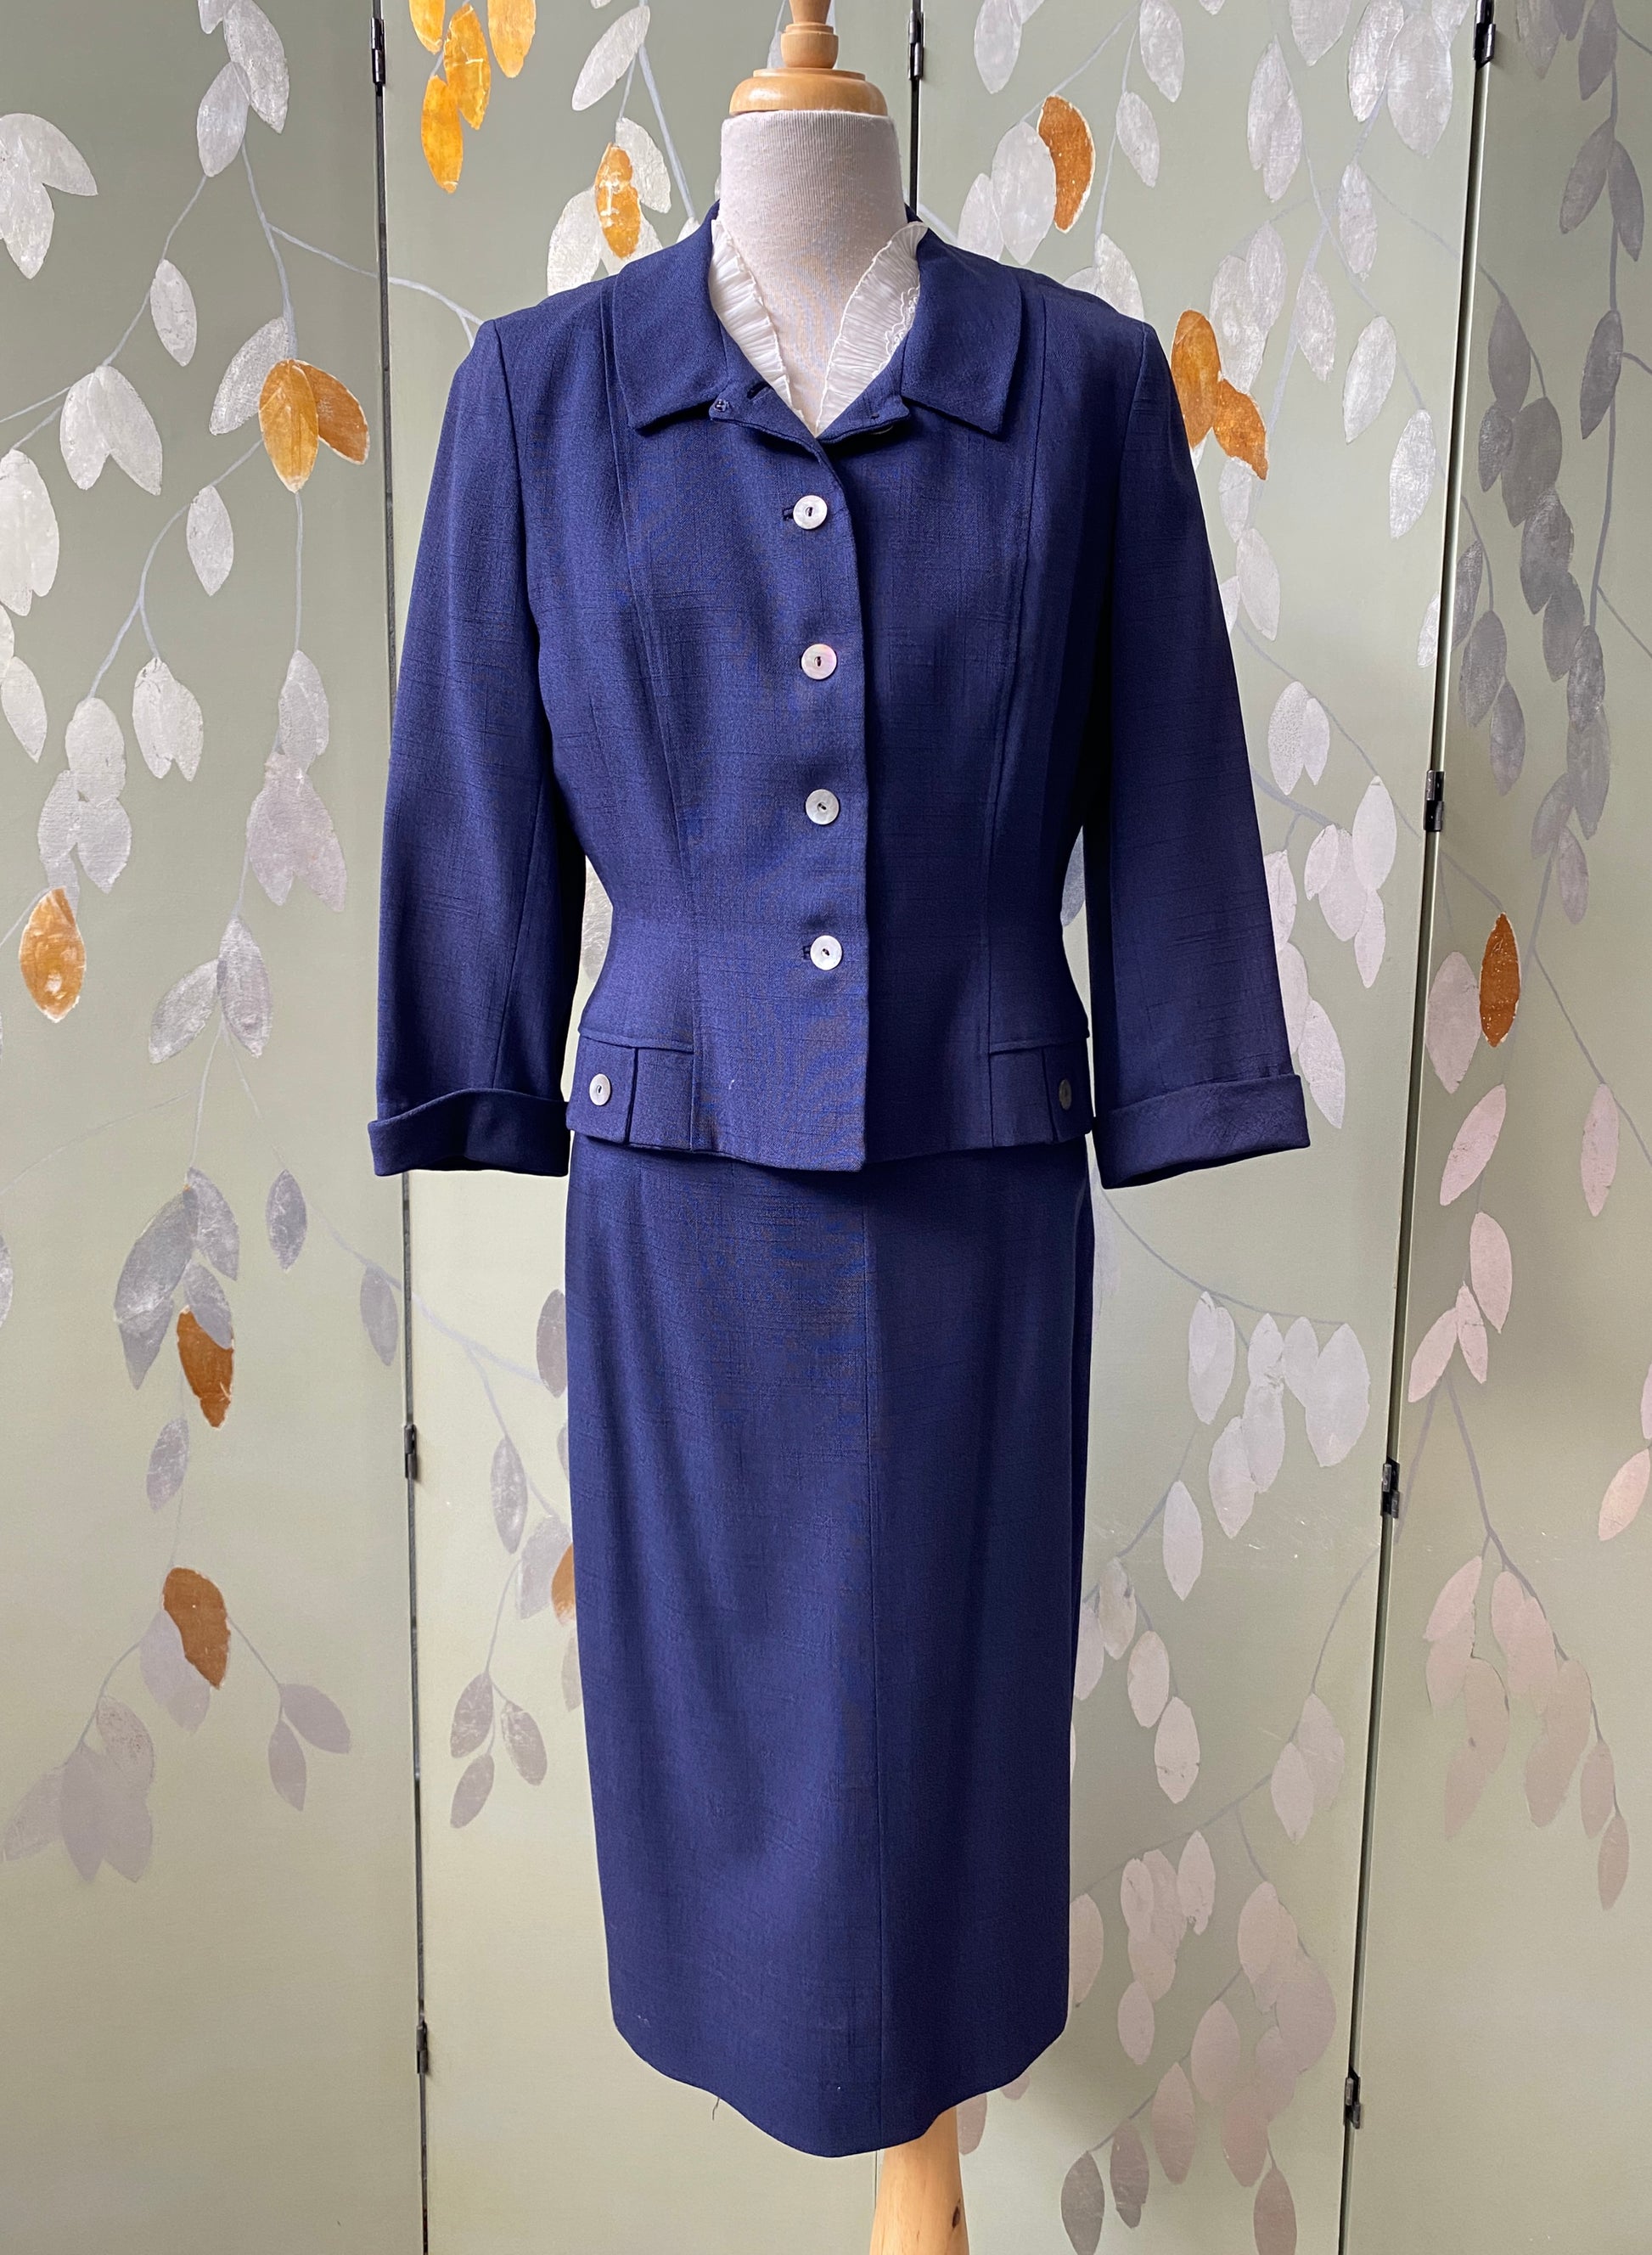 Vintage 1950s Navy Skirt Suit, S-M